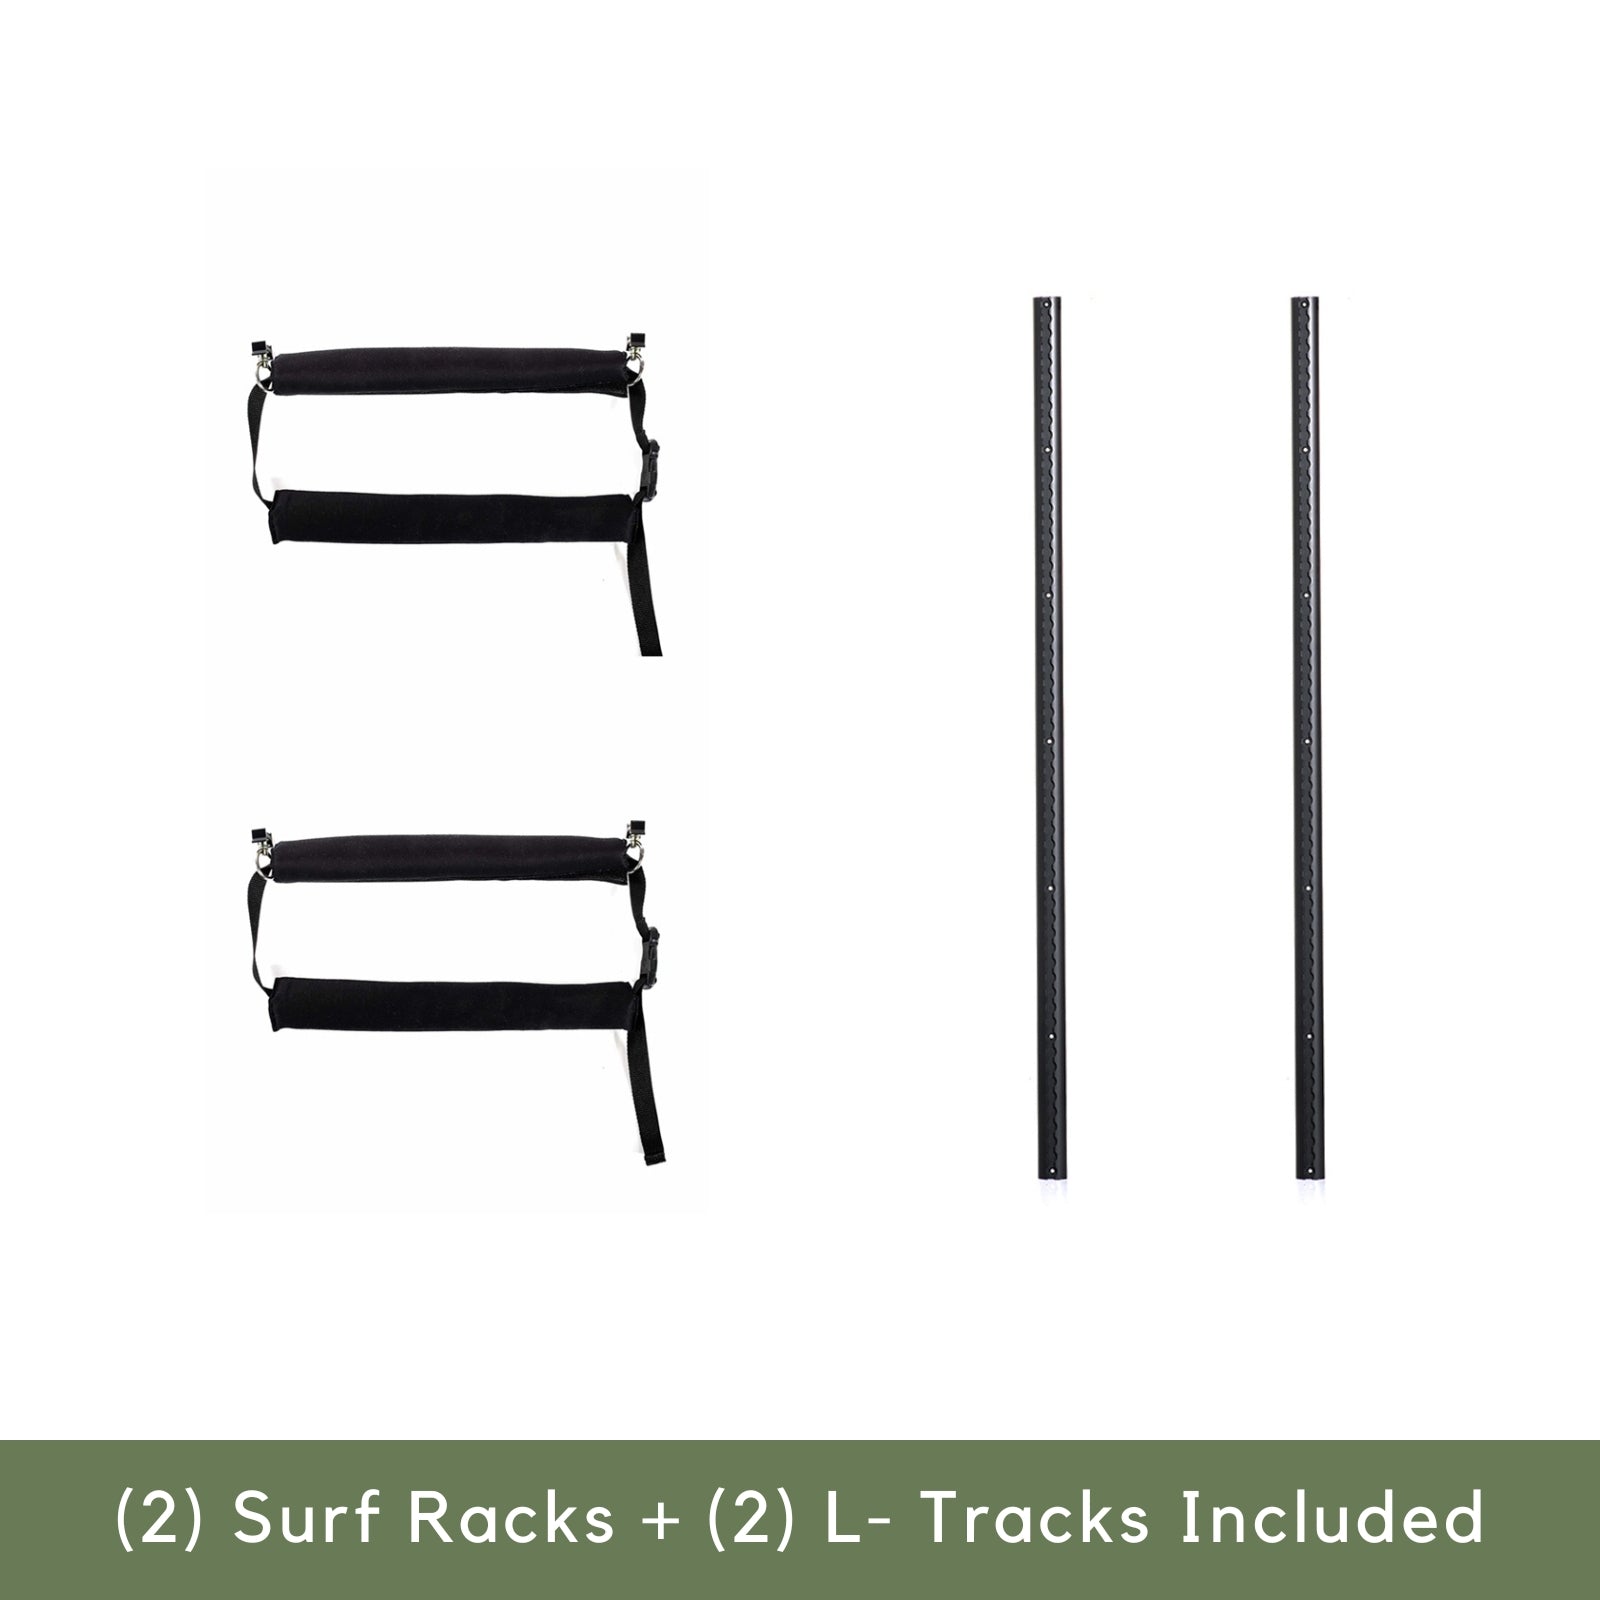 Interior Surf Racks